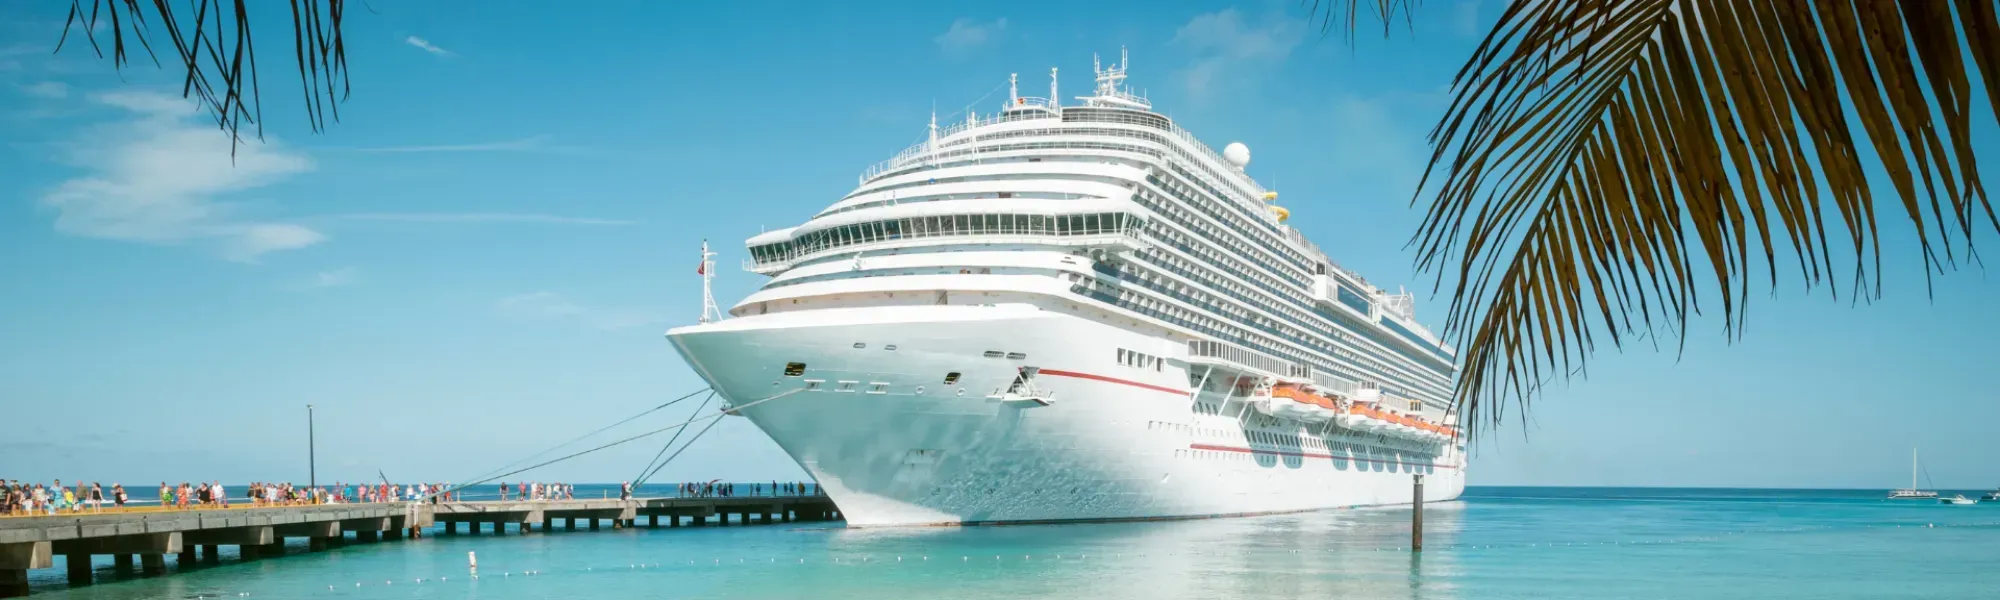 Cruise Crew - Cruise Seagoing - Cruise Recruitment - Faststream Recruitment